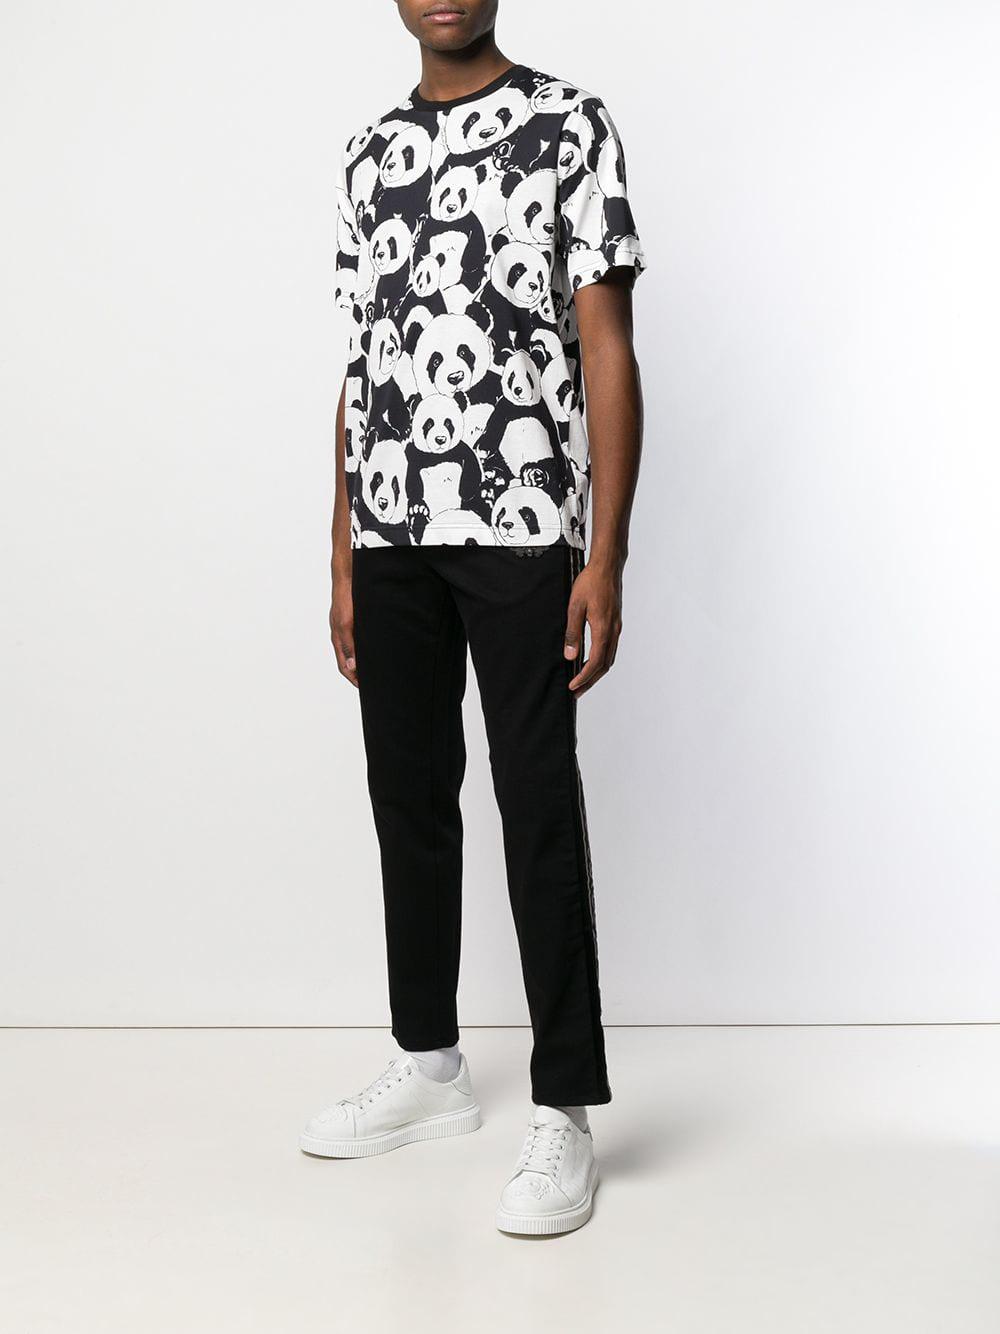 Dolce & Gabbana Panda Print T-shirt in Black for Men | Lyst